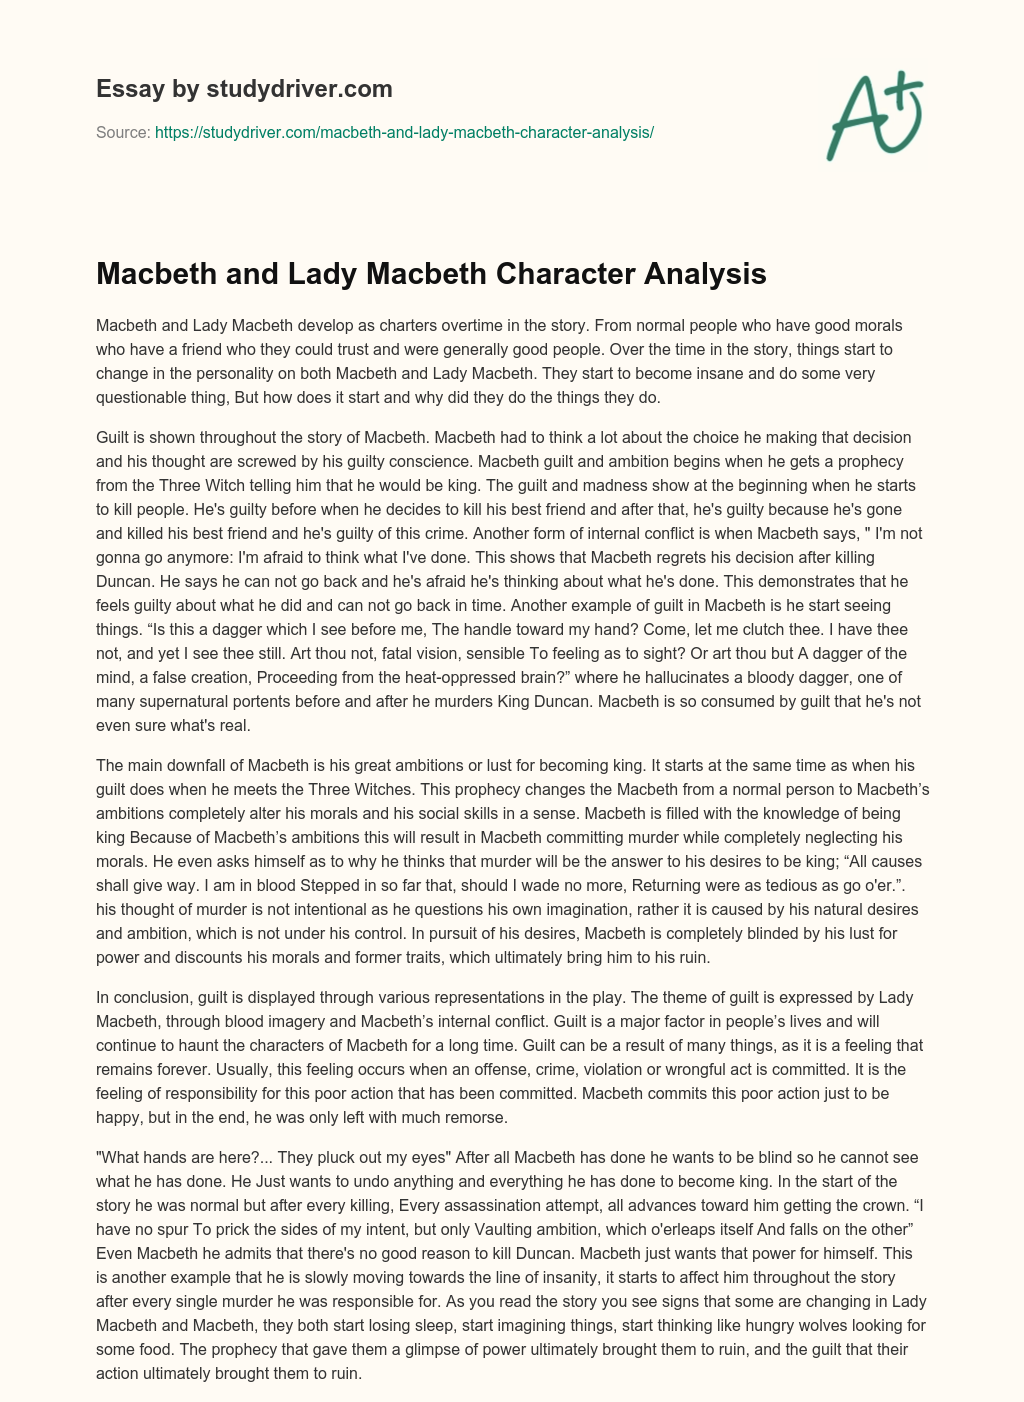 Macbeth and Lady Macbeth Character Analysis essay